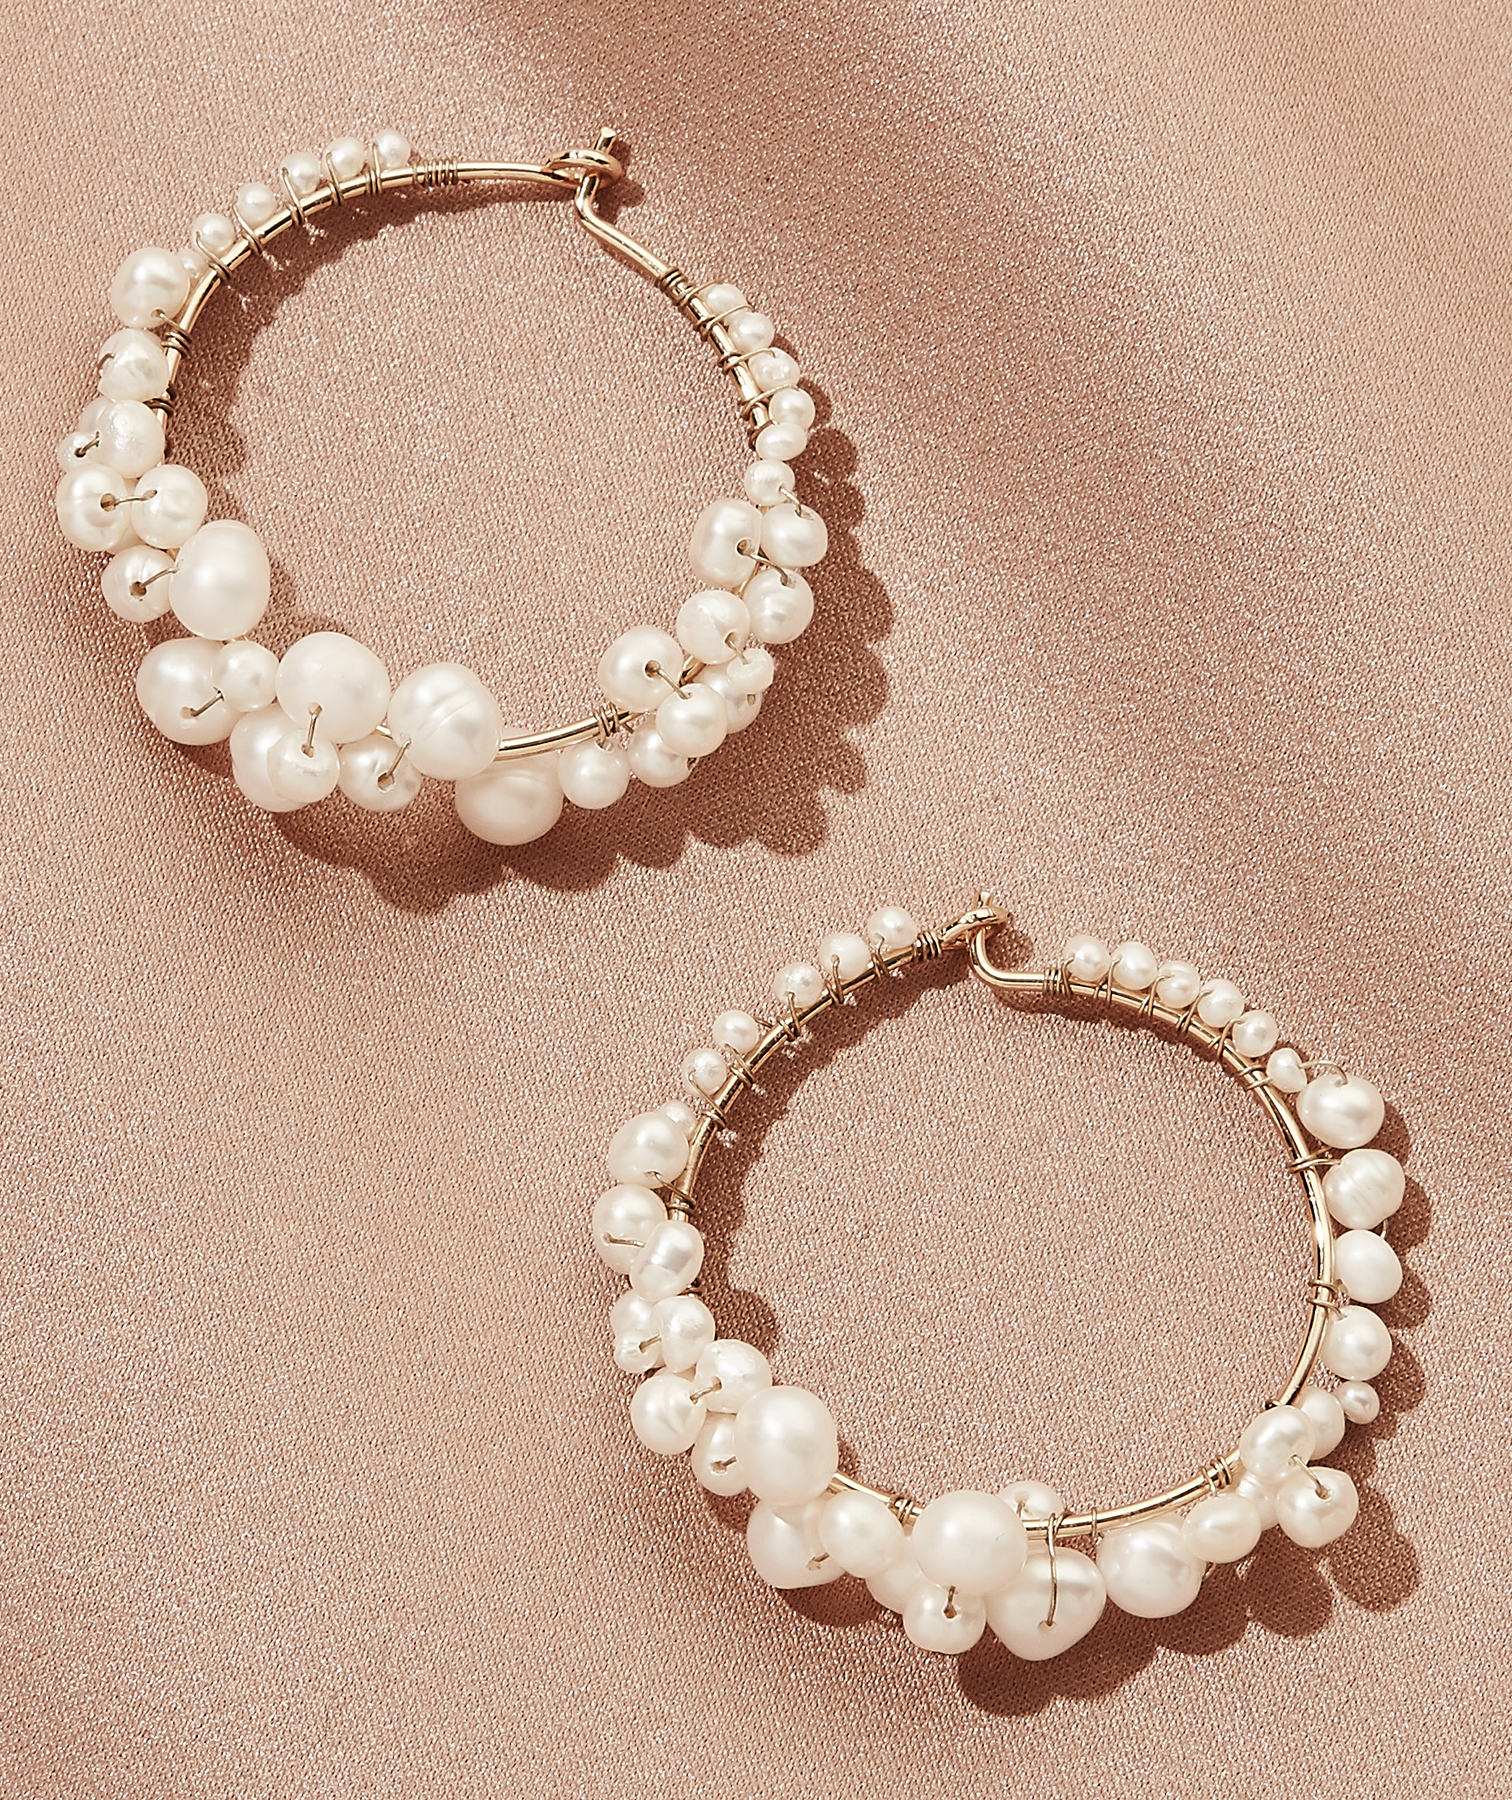 These pearl hoop earrings make a great bridesmaid gift.